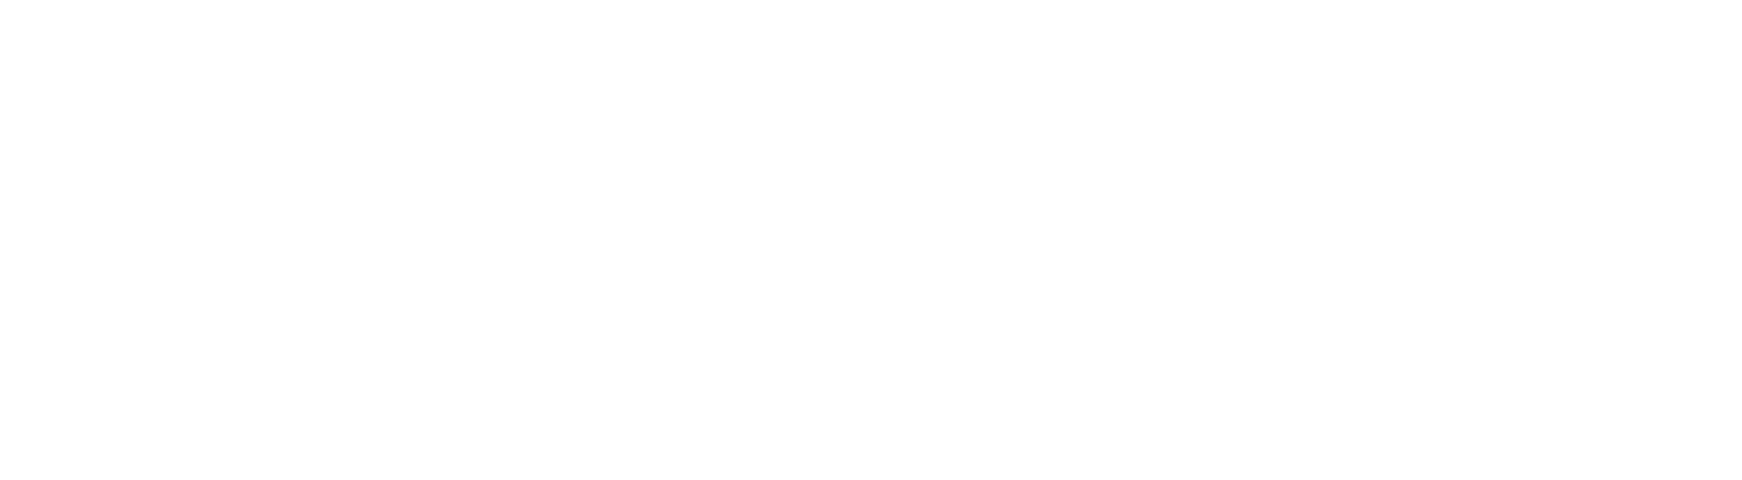 the-chicago-school-main-logo-white